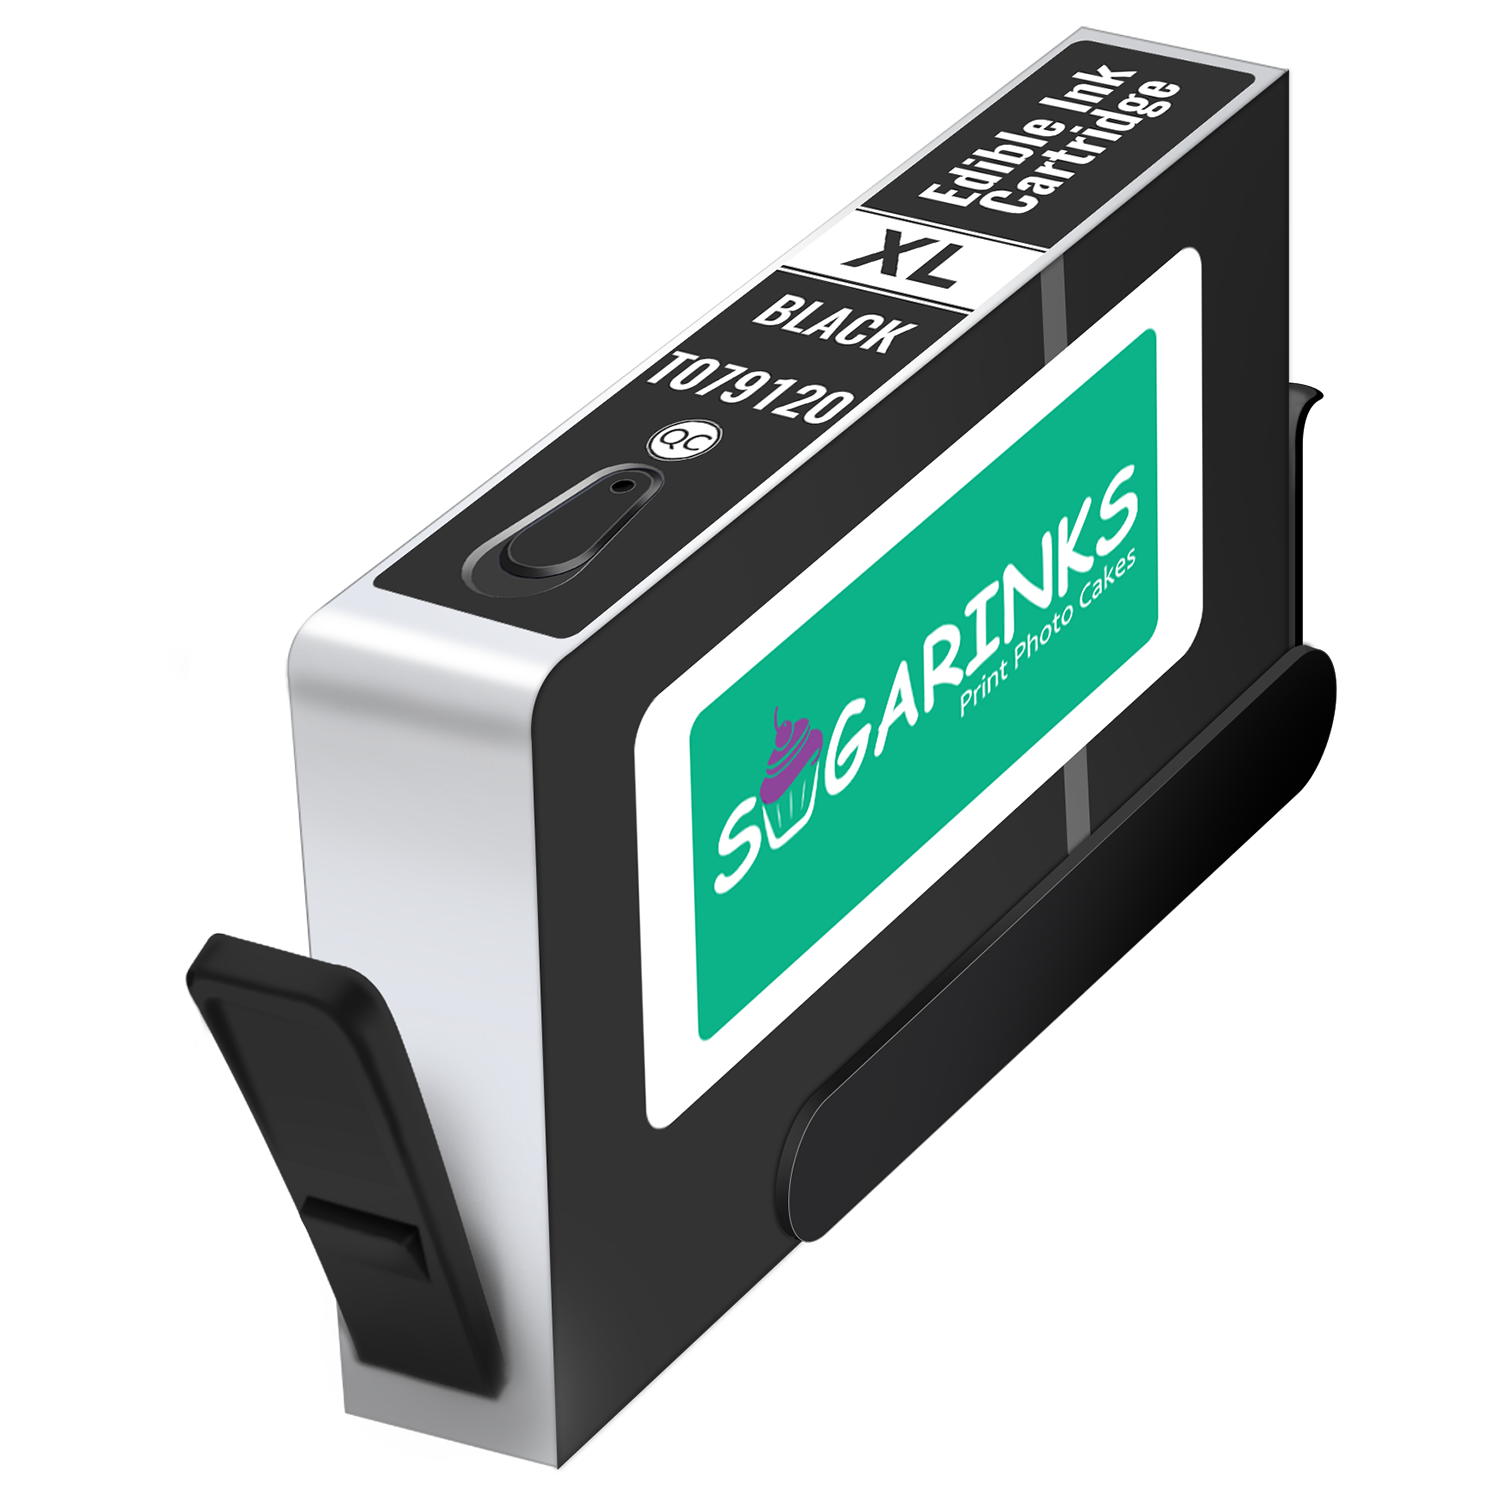 Sugarinks Edible Ink Cartridges T079120 for Epson Edible Printers – Black 